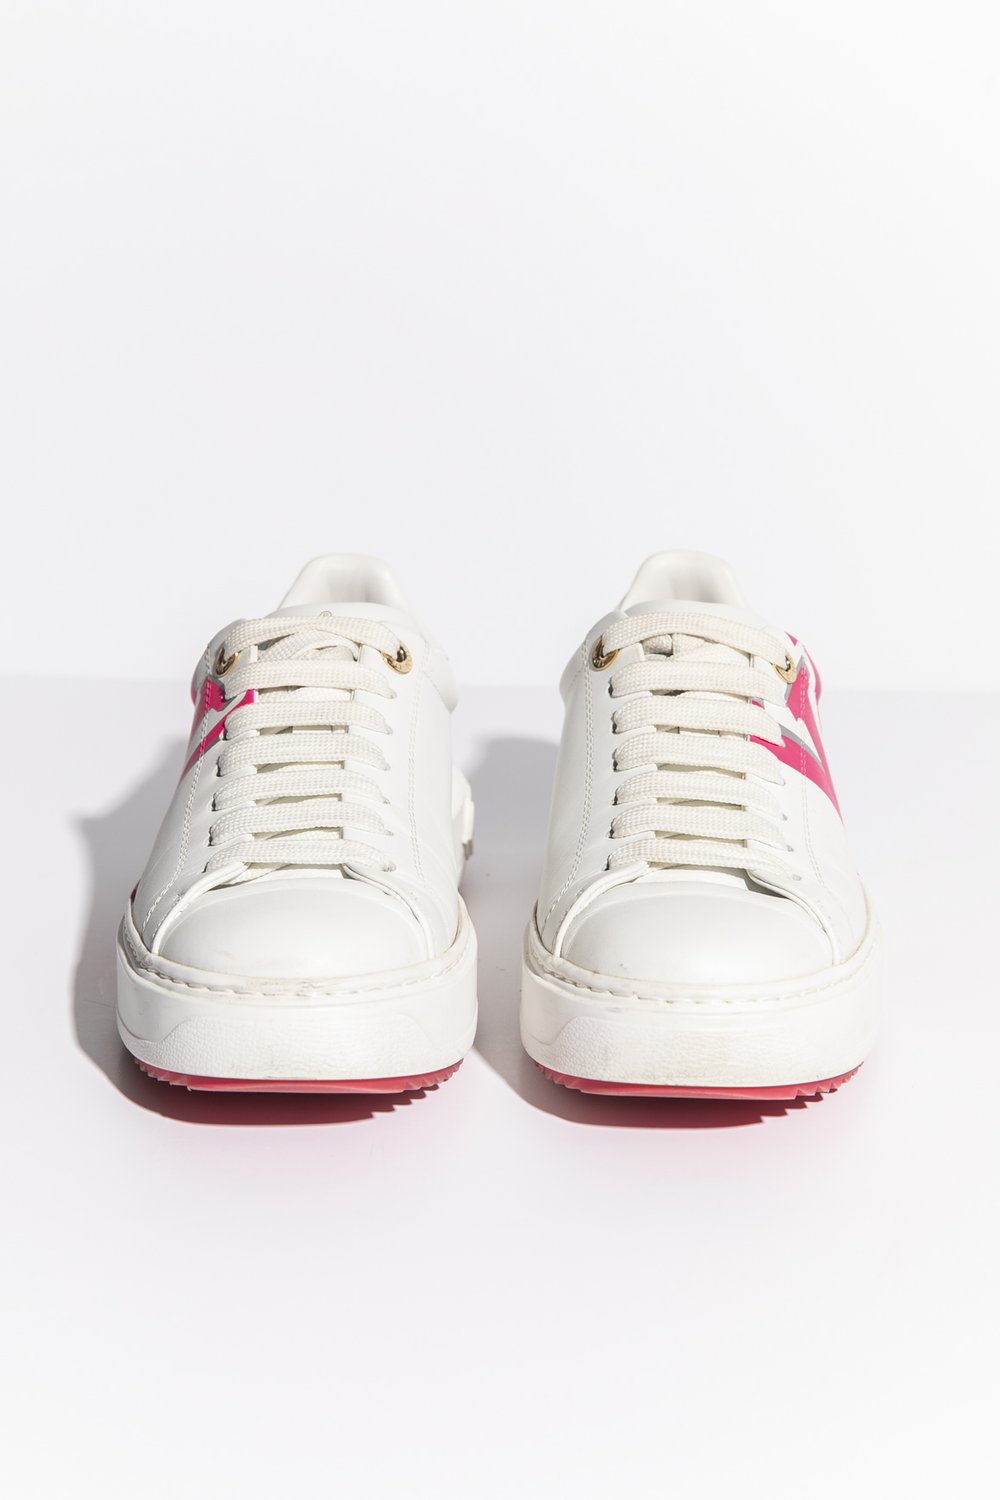 Louis Vuitton Squad Pink Denim Sneakers 38.5 – DAC